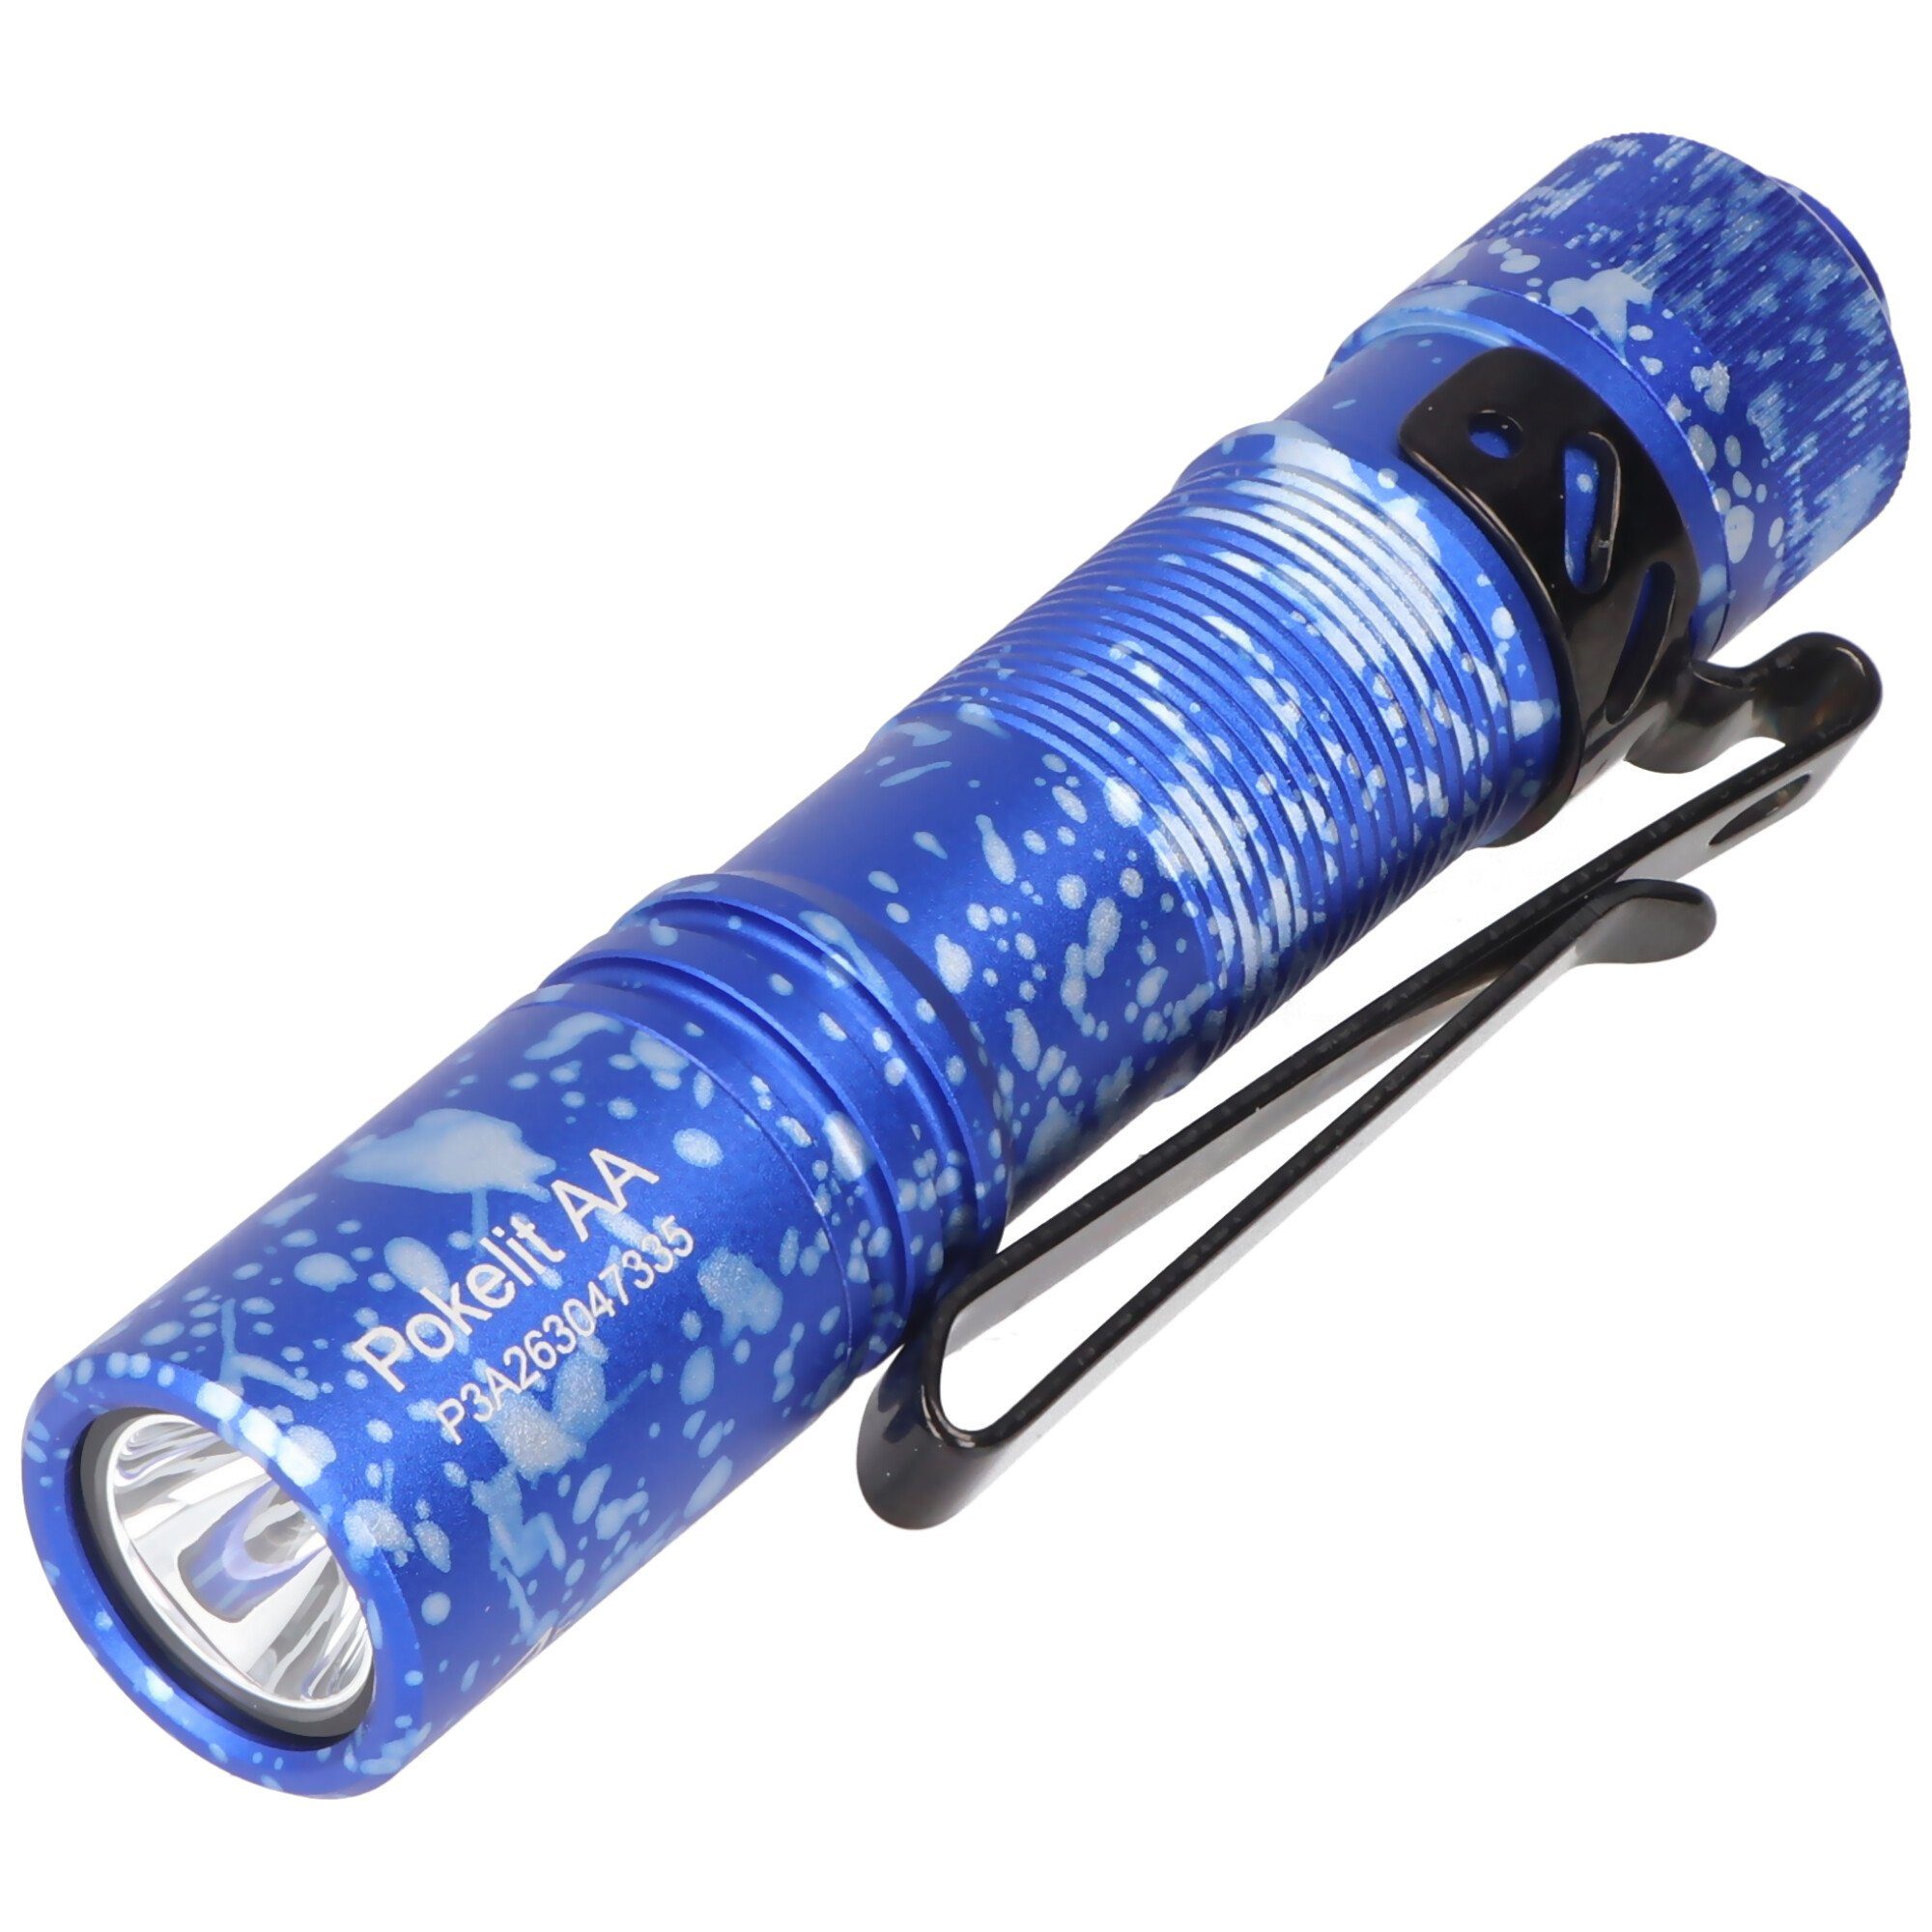 LED Acebeam Taschenlampe 550 in Optik, AceBeam camouflage Pokelit AA L blauer LED-Taschenlampe